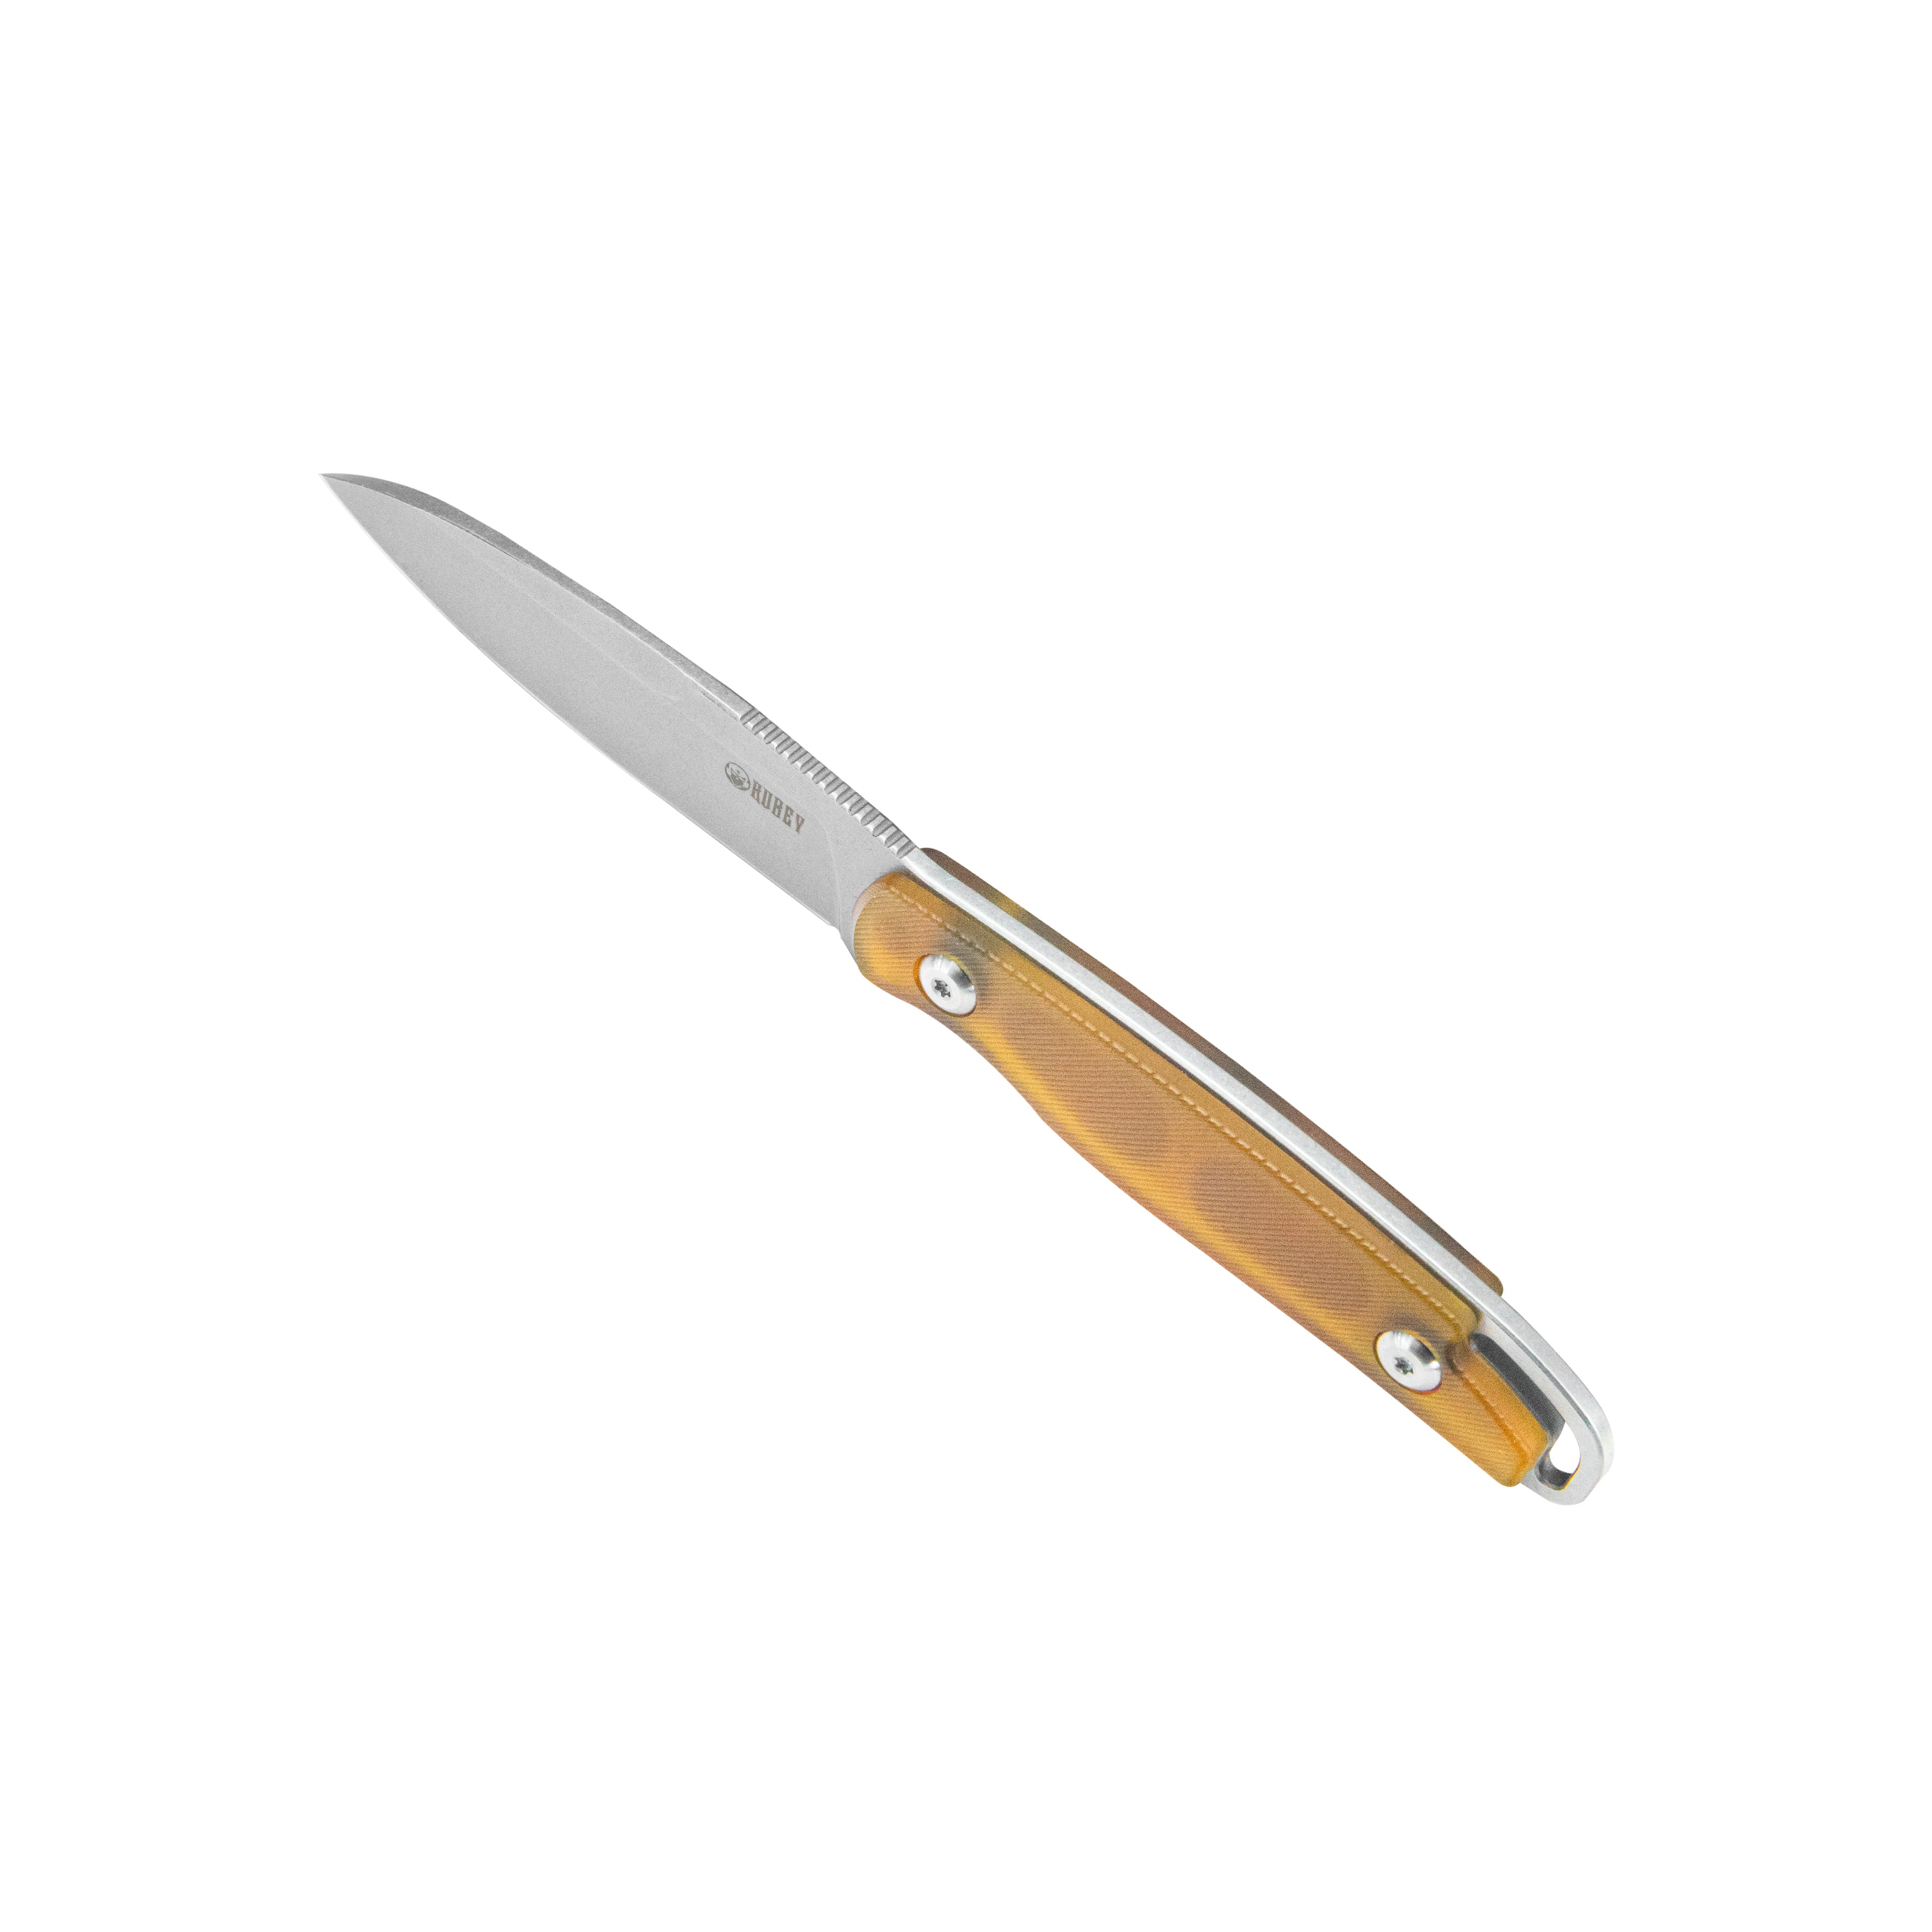 Kubey Dust Devil Outdoor Utility Knife Fixed Blade Knives Ultem 3.23'' Beadblast 14C28N KU357C